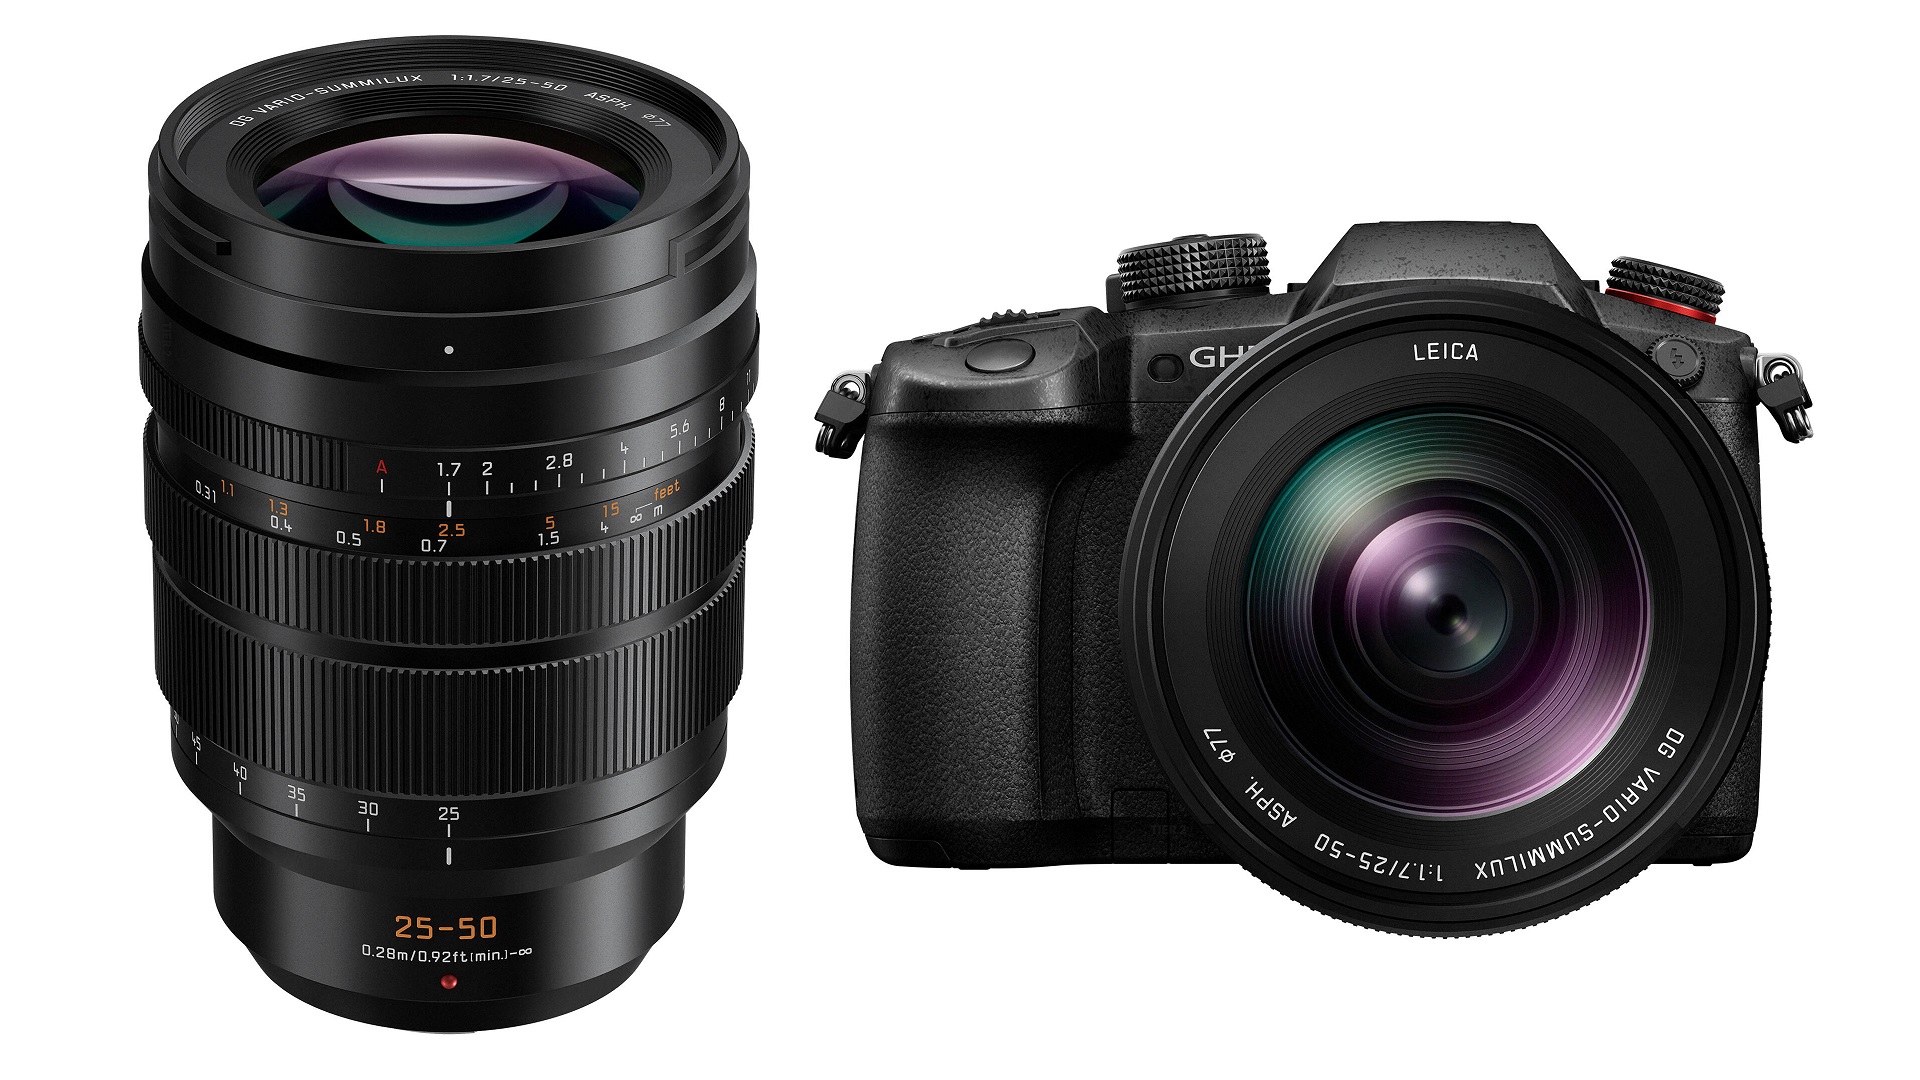 cent revolutie Martin Luther King Junior Panasonic Leica DG Vario-Summilux 25-50mm f/1.7 Lens - Launch | CineD